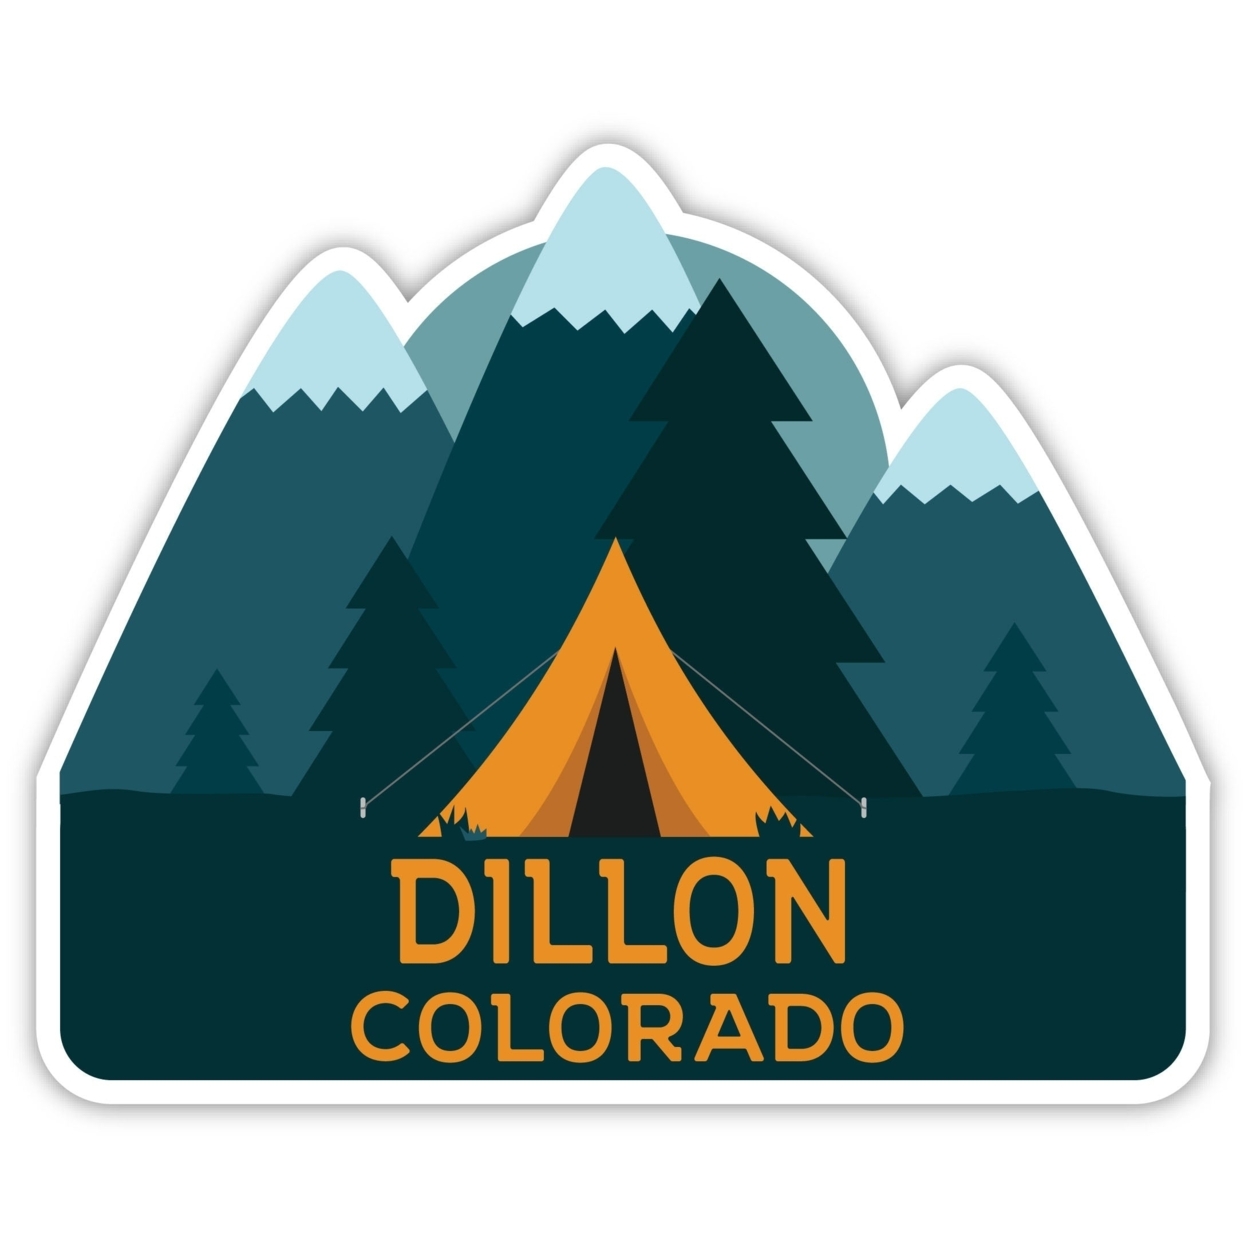 Dillon Colorado Souvenir Decorative Stickers (Choose Theme And Size) - Single Unit, 10-Inch, Camp Life